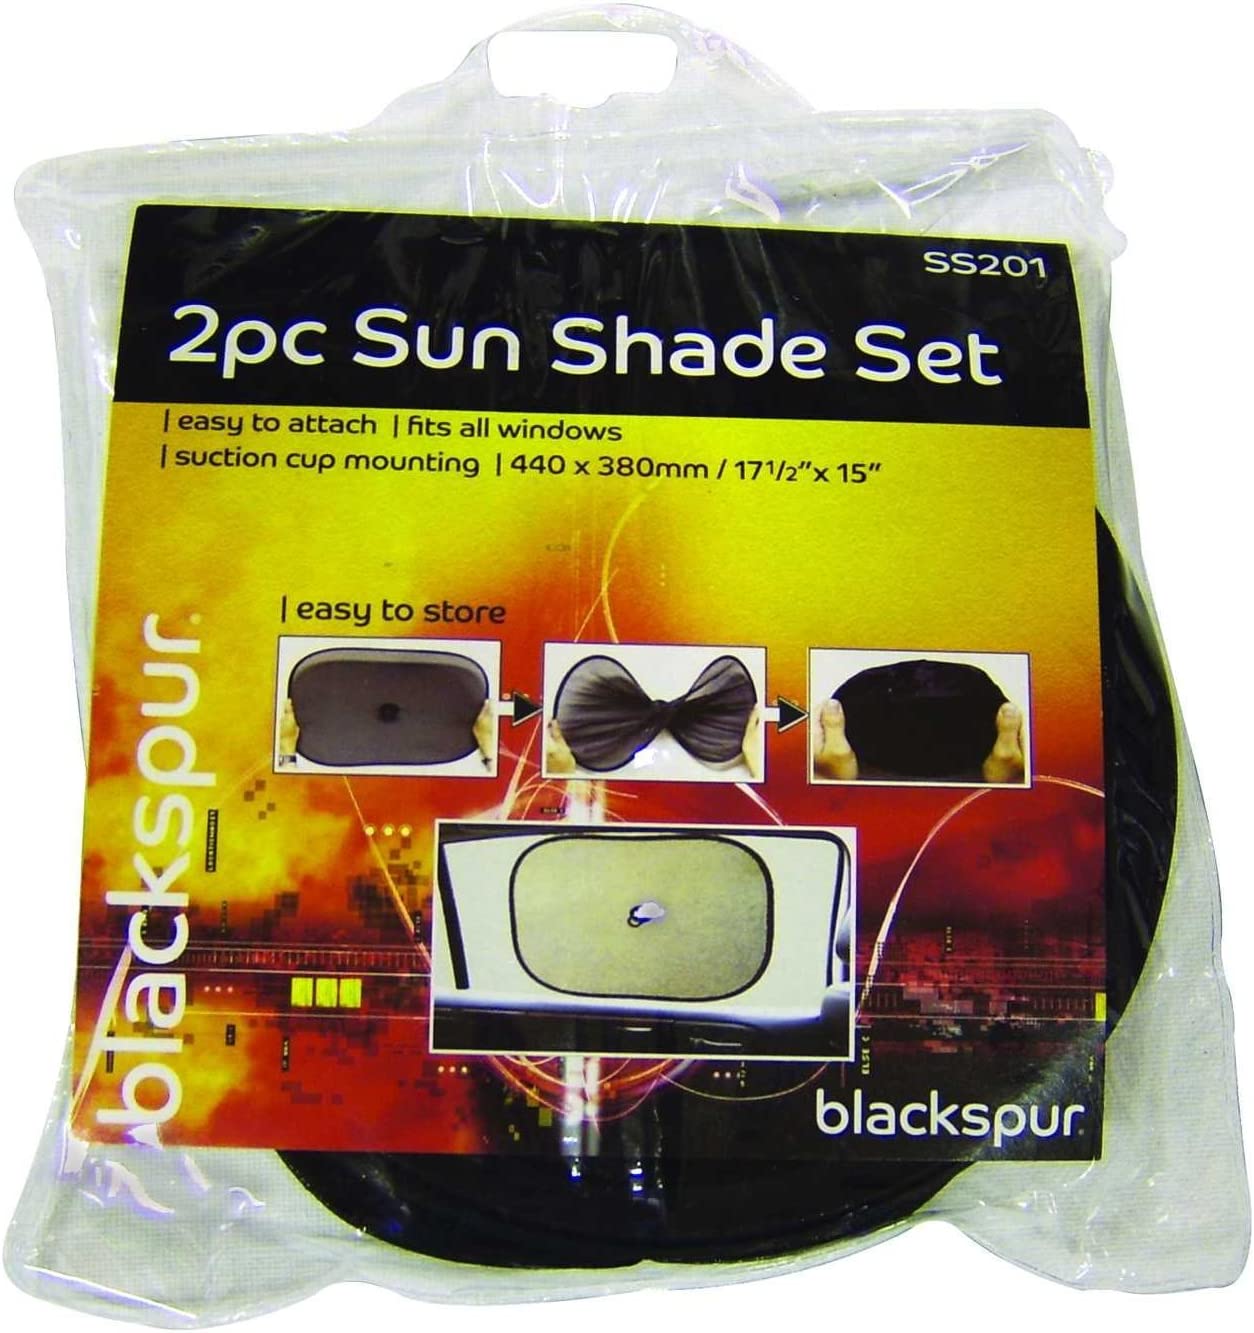 Car Window Sun Shade Pack Of 2: Amazon.co.uk: Kitchen & Home